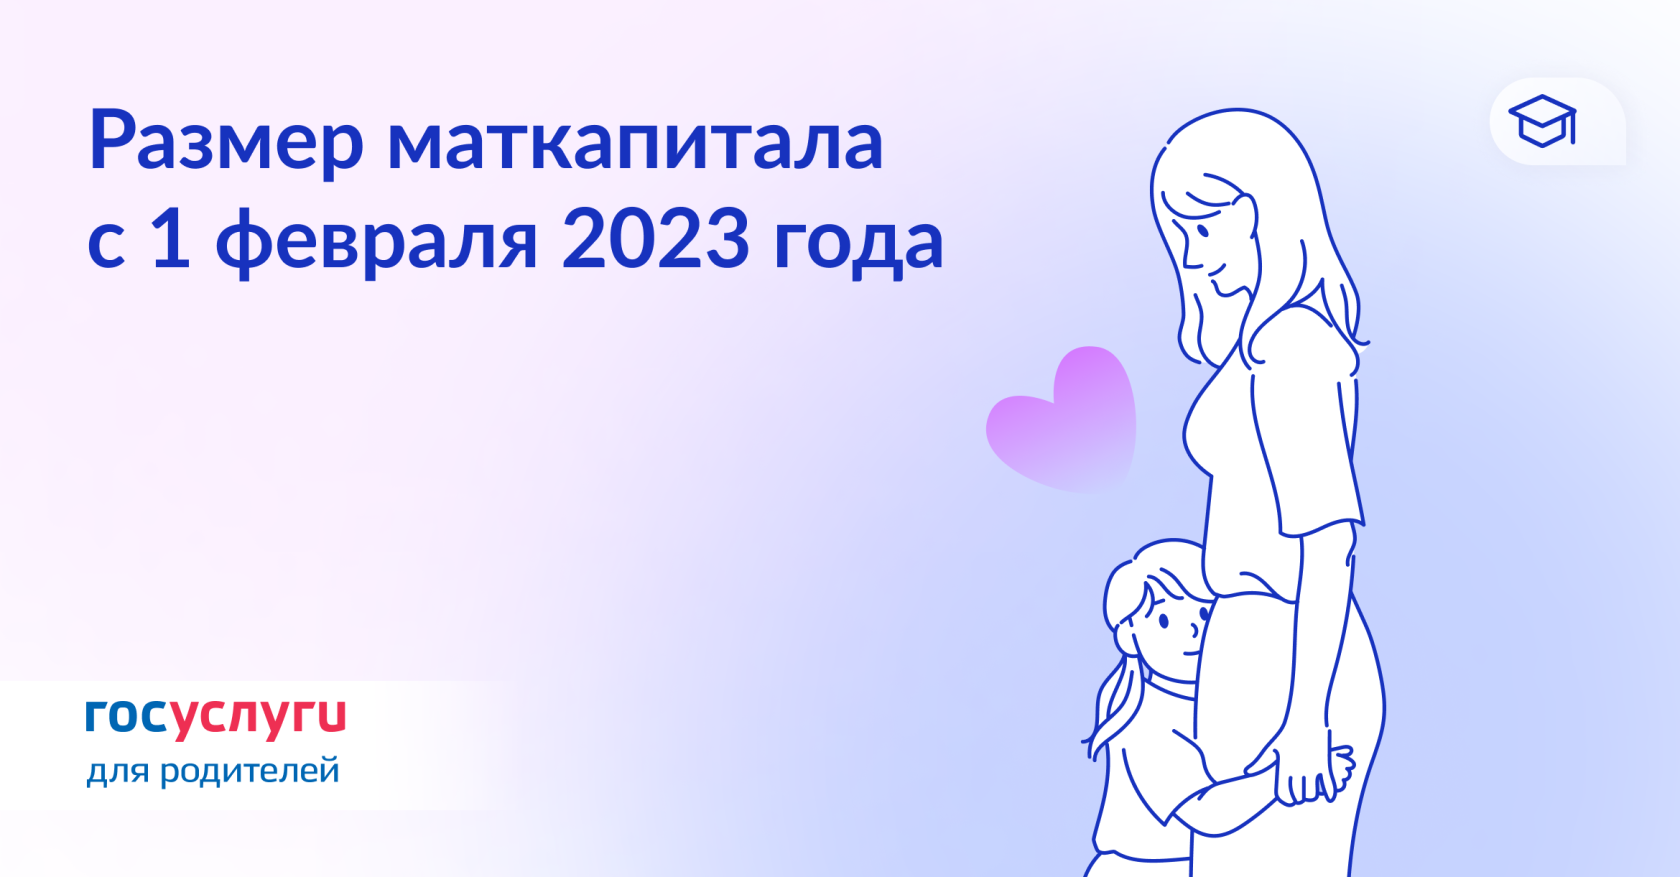 Материнский капитал в 2023 году. Индексация материнского капитала в 2023. Сумма материнского капитала в 2023 году. Индексация мат капитала в 2023 году.